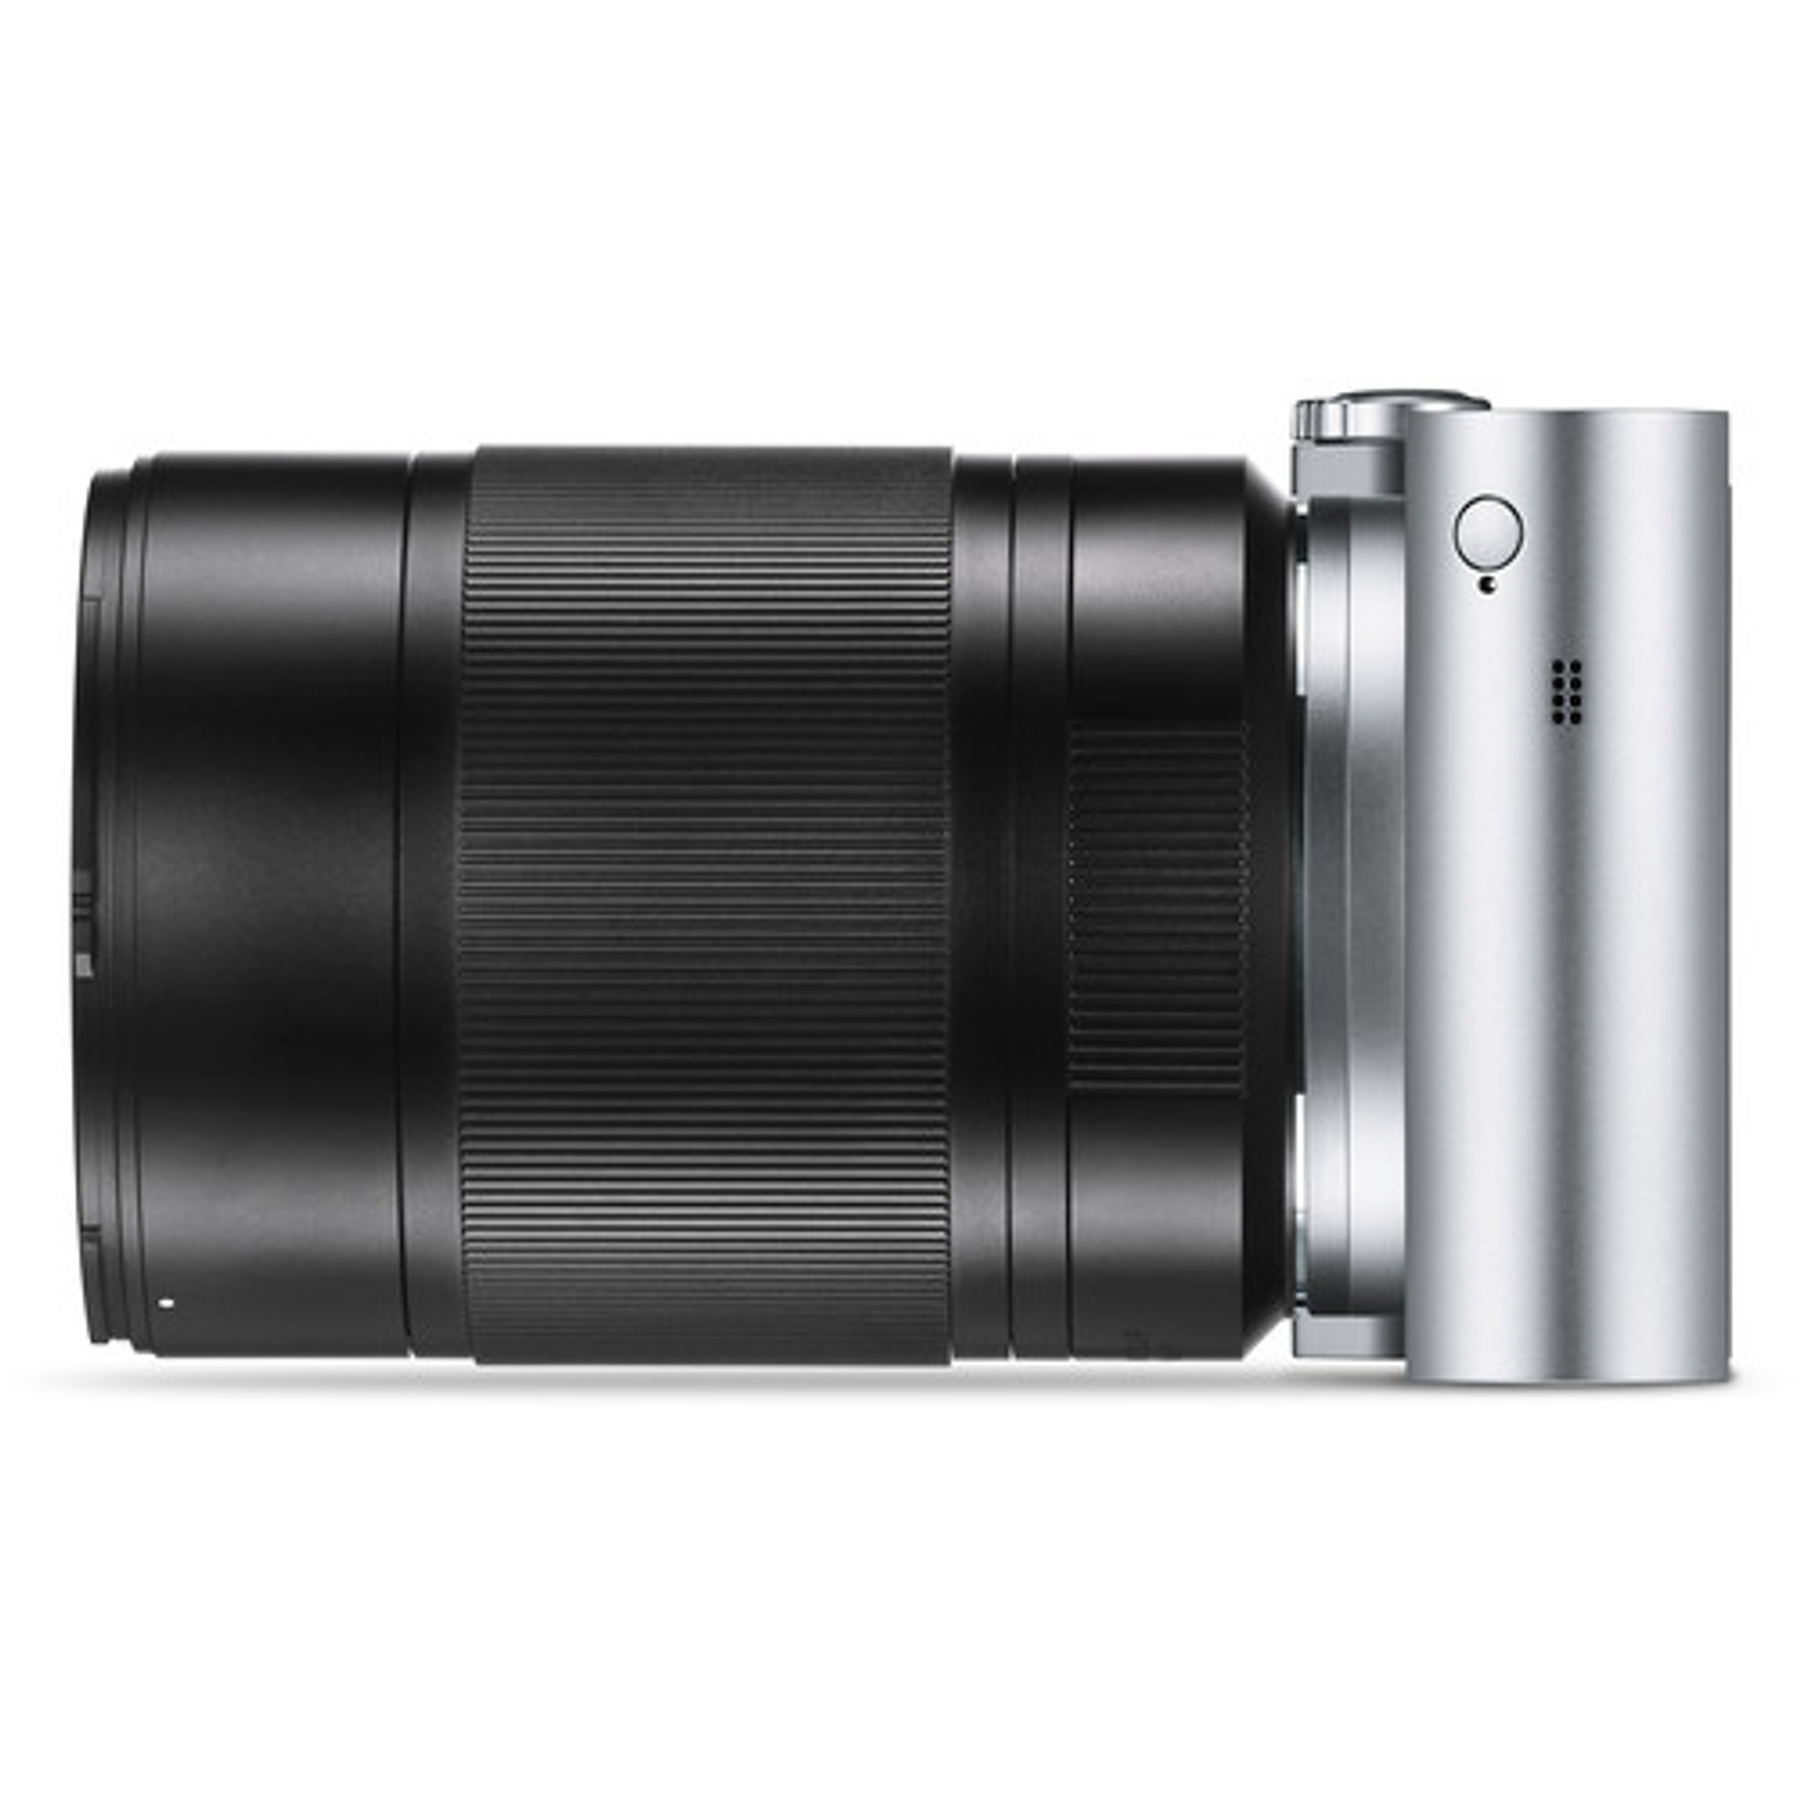 Leica APO-Macro-Elmarit-TL 60mm f/2.8 ASPH. (Black)